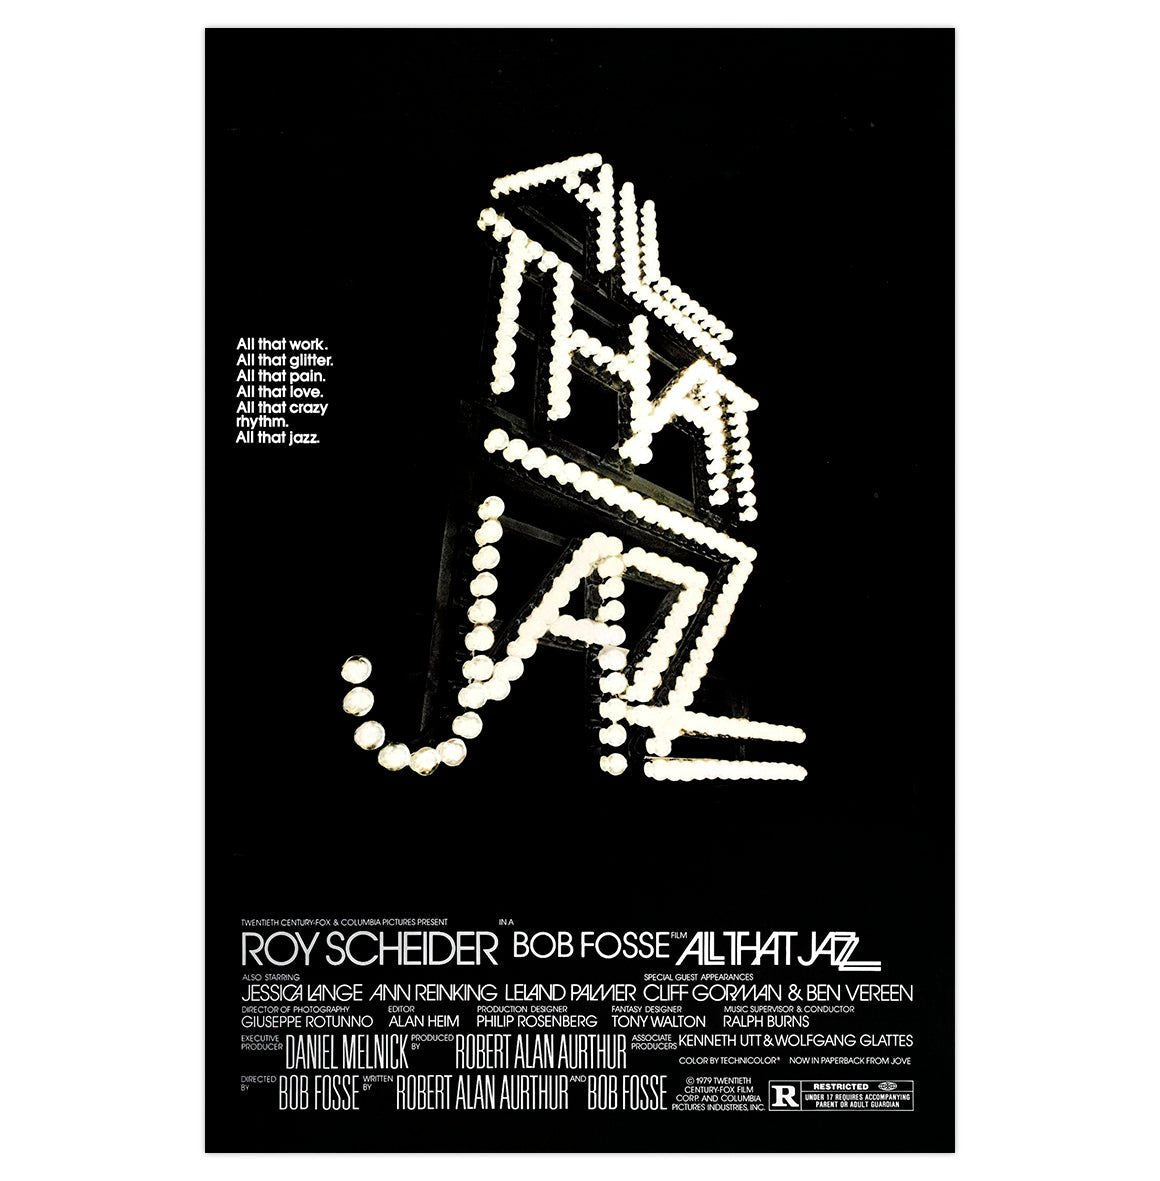 Mini poster adhesivo y reposicionable: All That Jazz - Tienda Pasquín